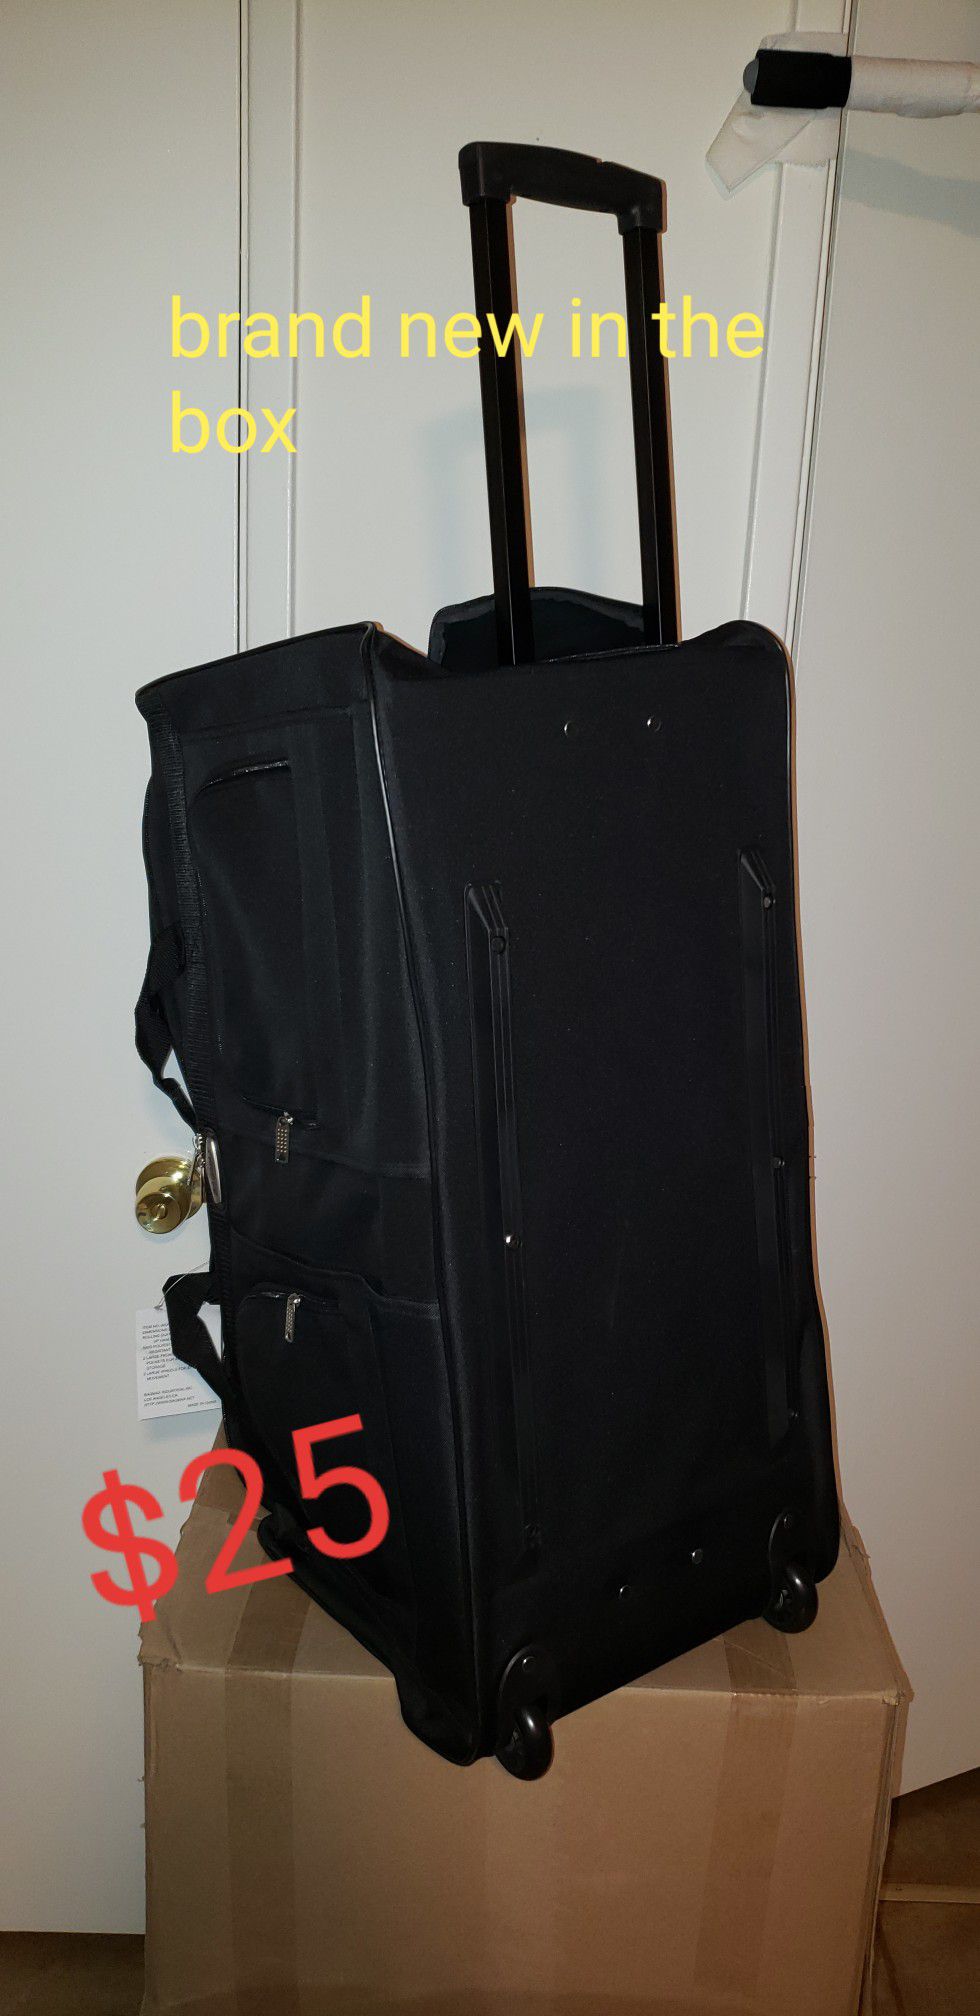 Duffel bag bolsa maletas duffle luggage suitcase brand new